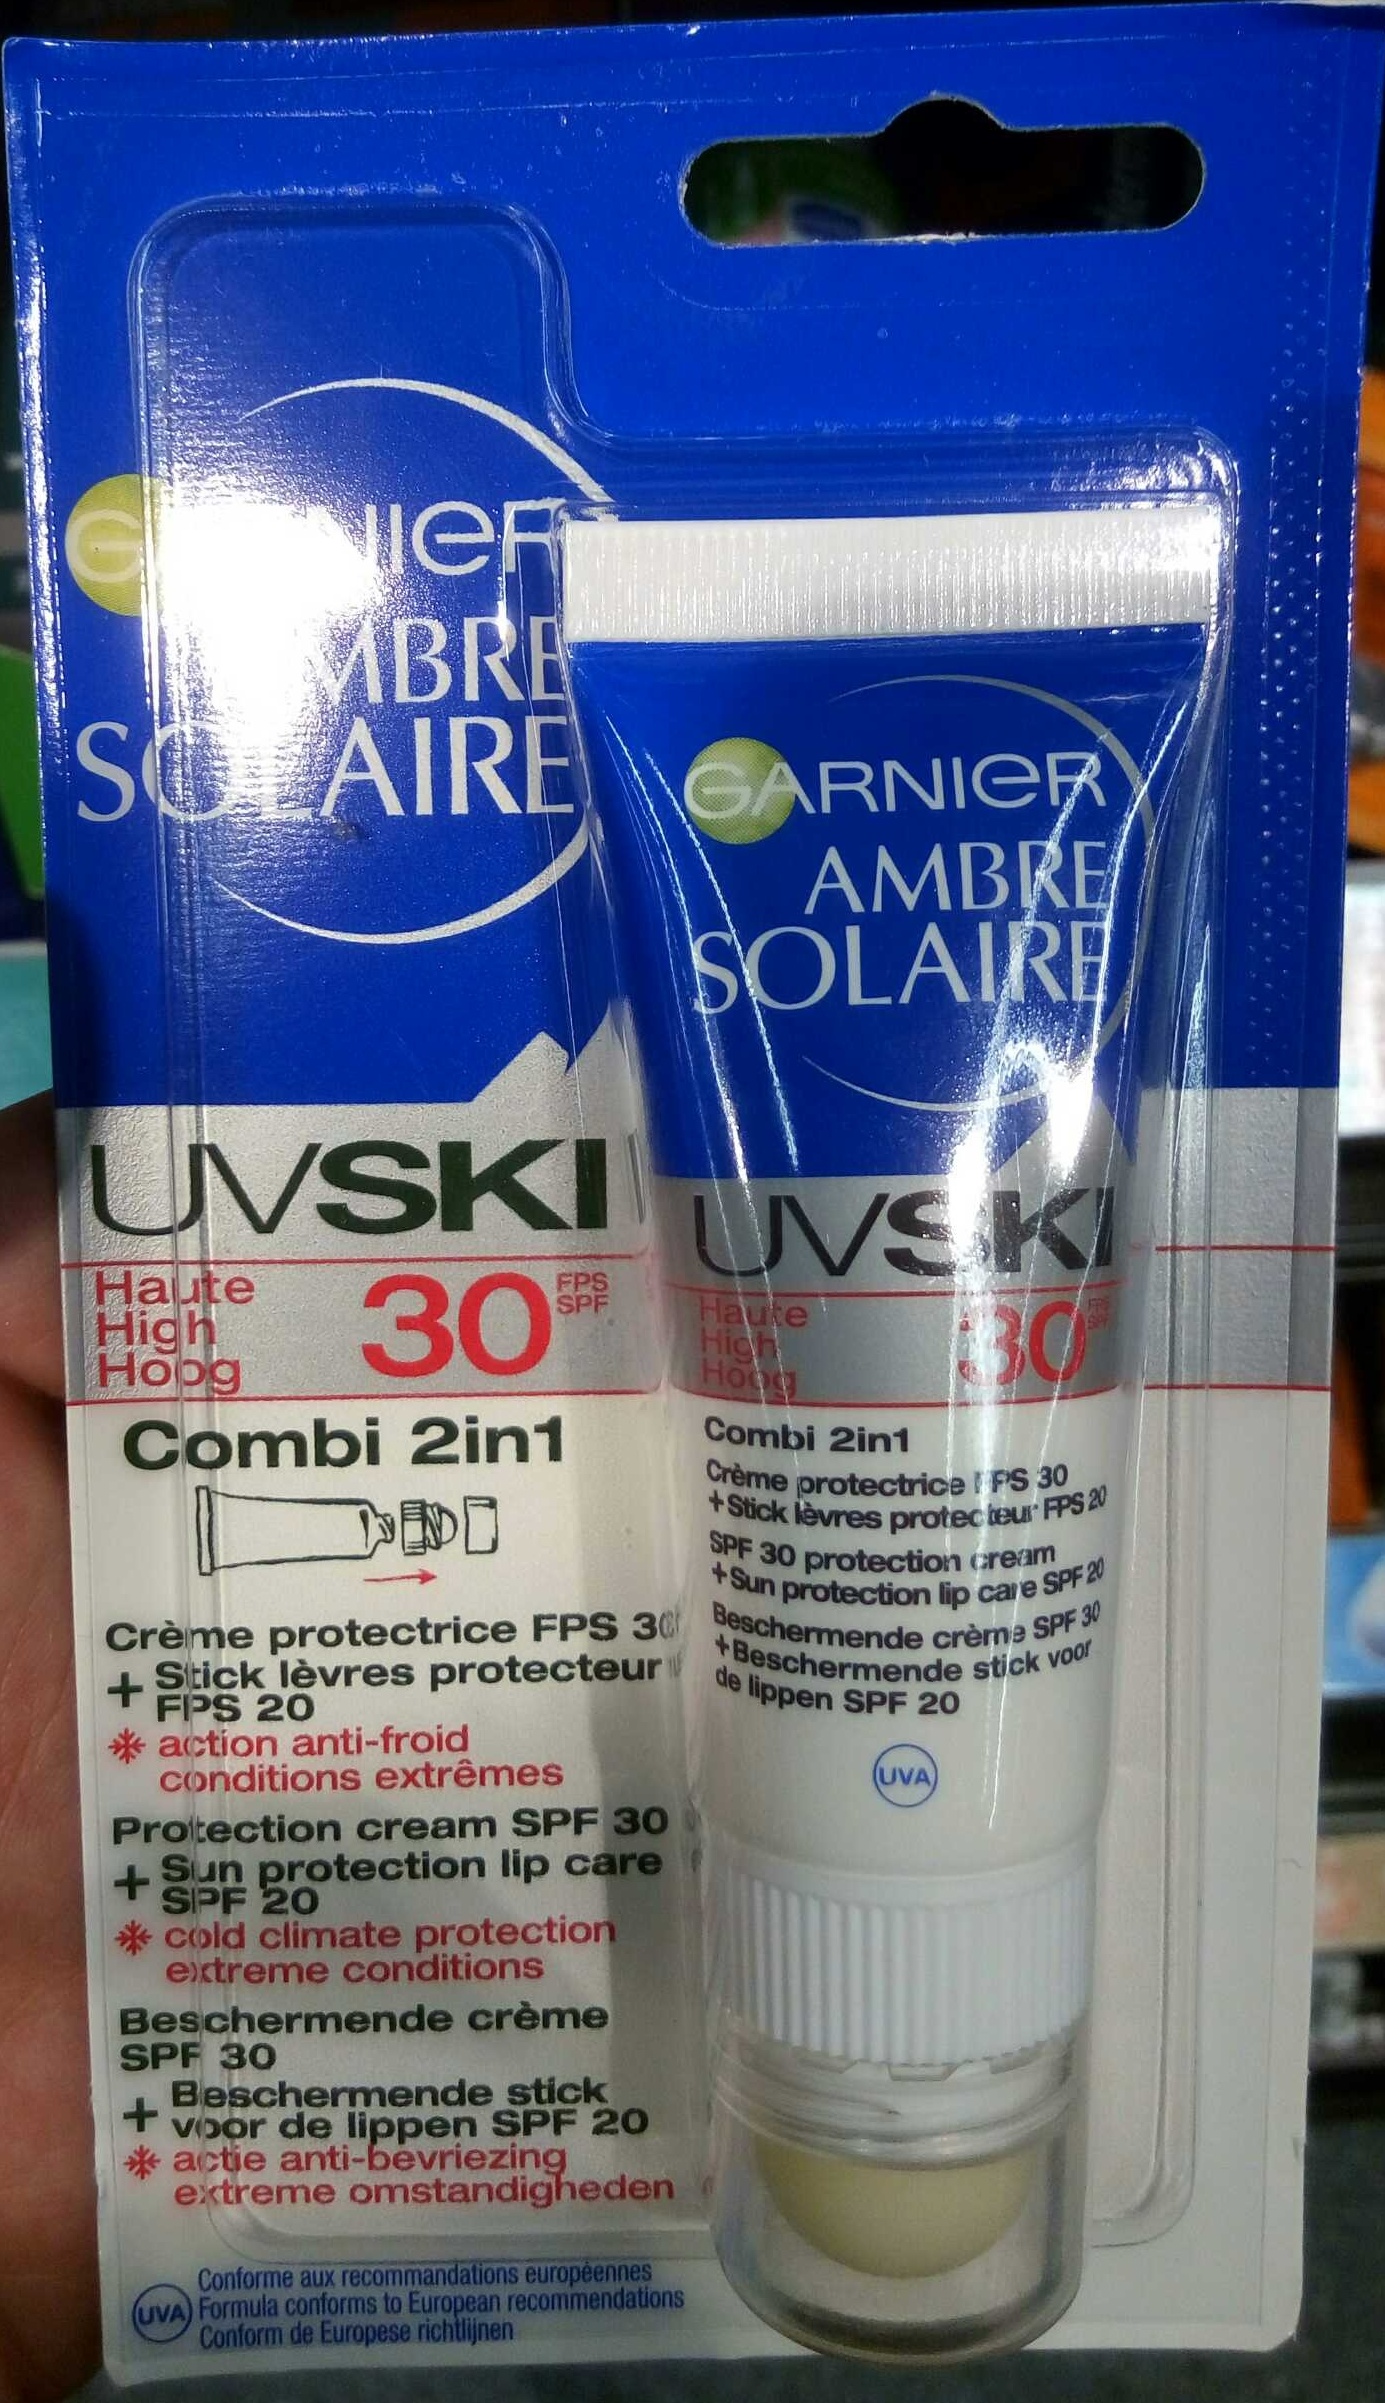 Ambre Solaire UV Ski 30 Combi 2in1 Crème protectrice + Stick lèvres protecteur - Tuote - fr